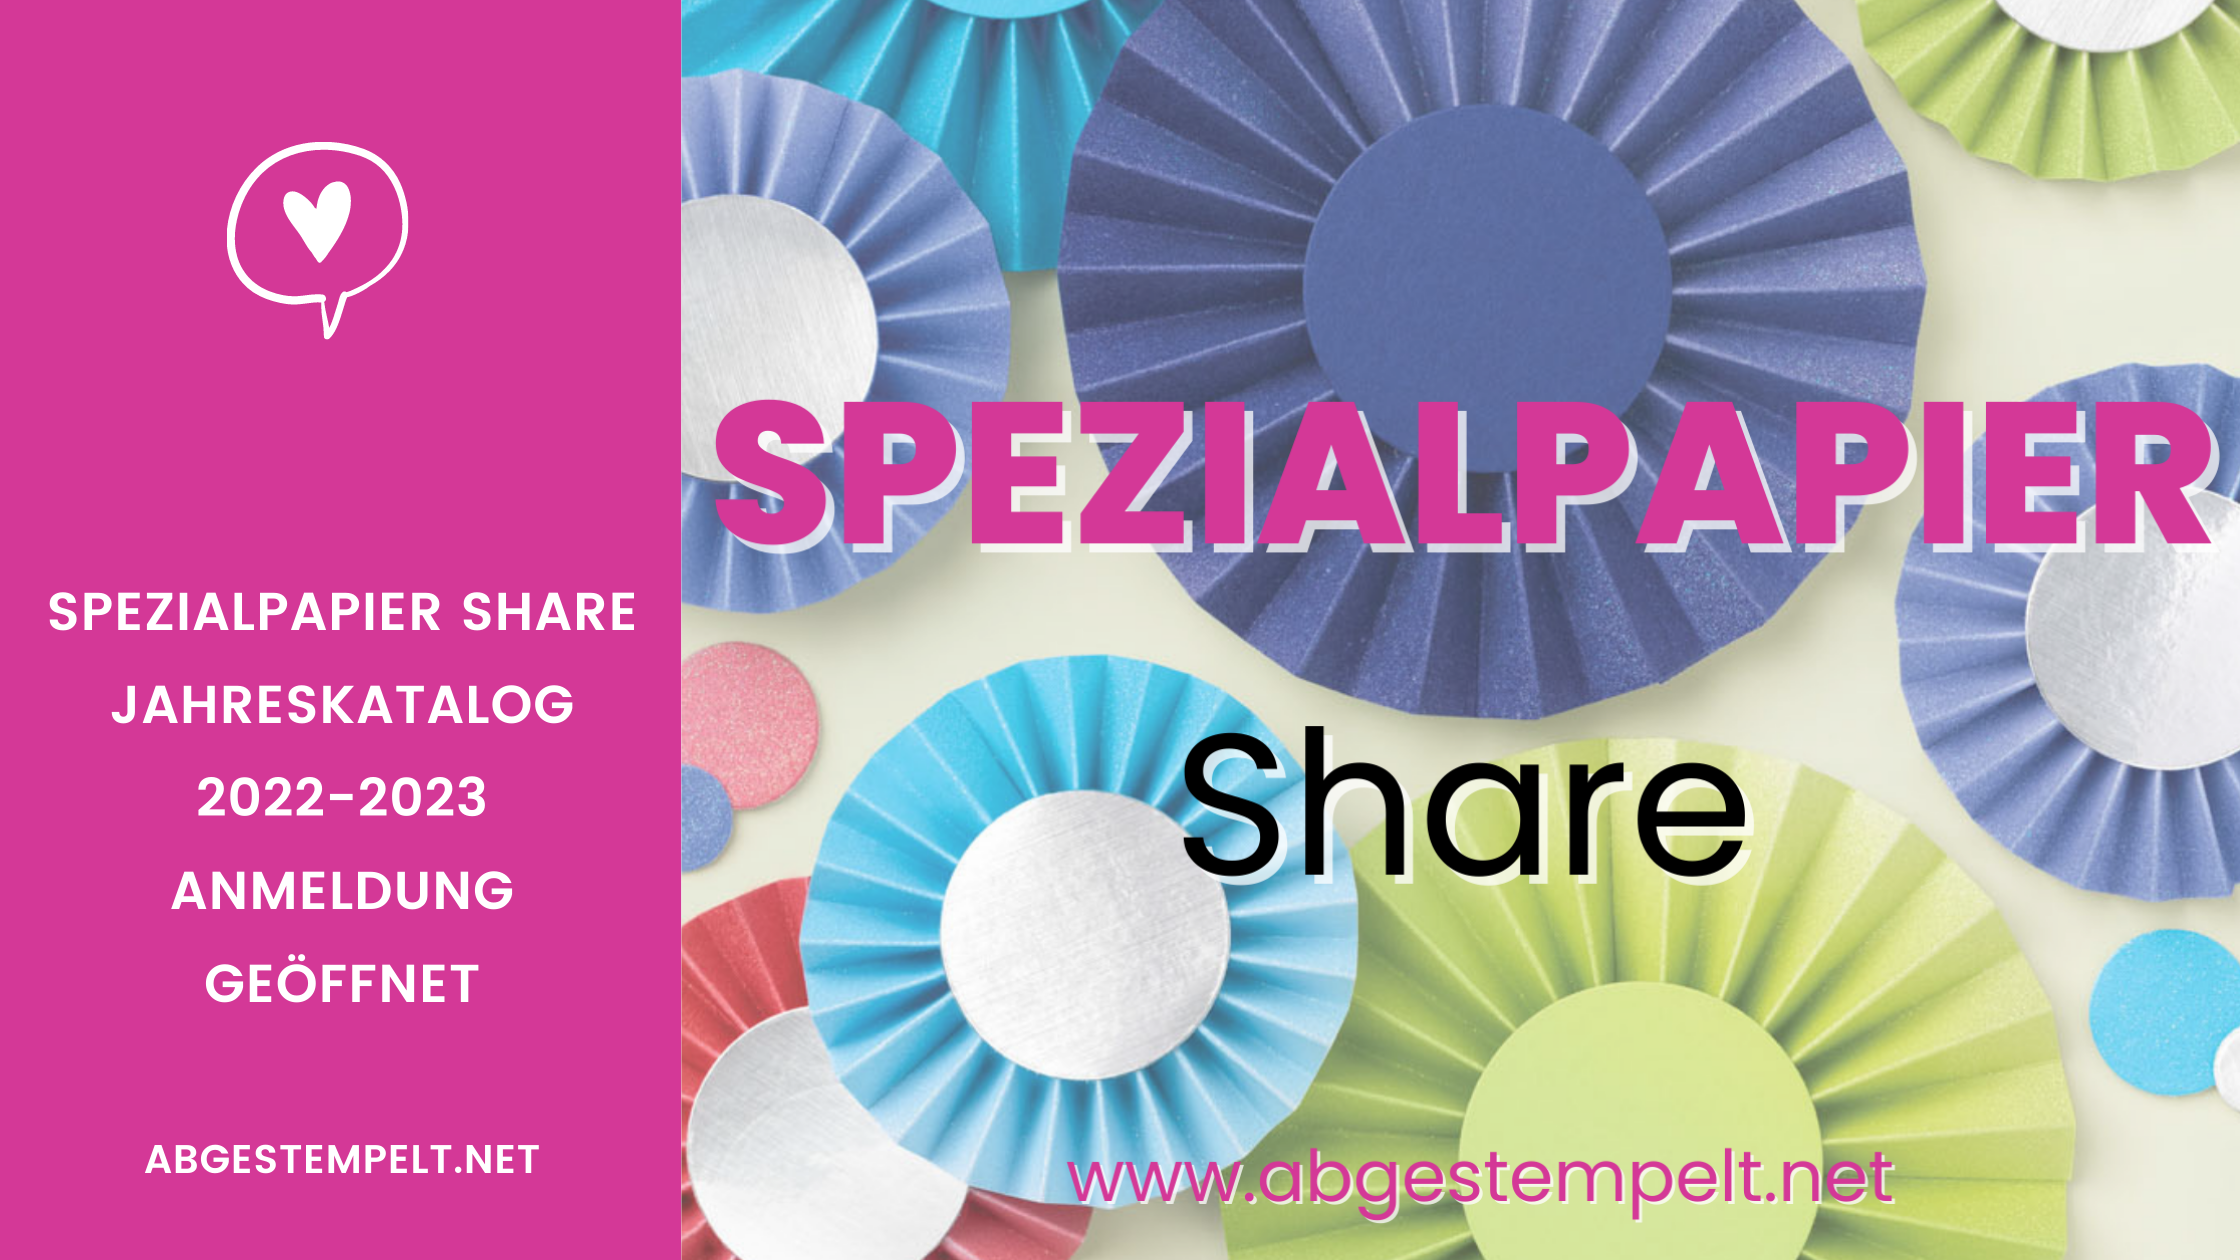 Blog stampin up Spezialpapier Share 2022-2023 abgestempelt